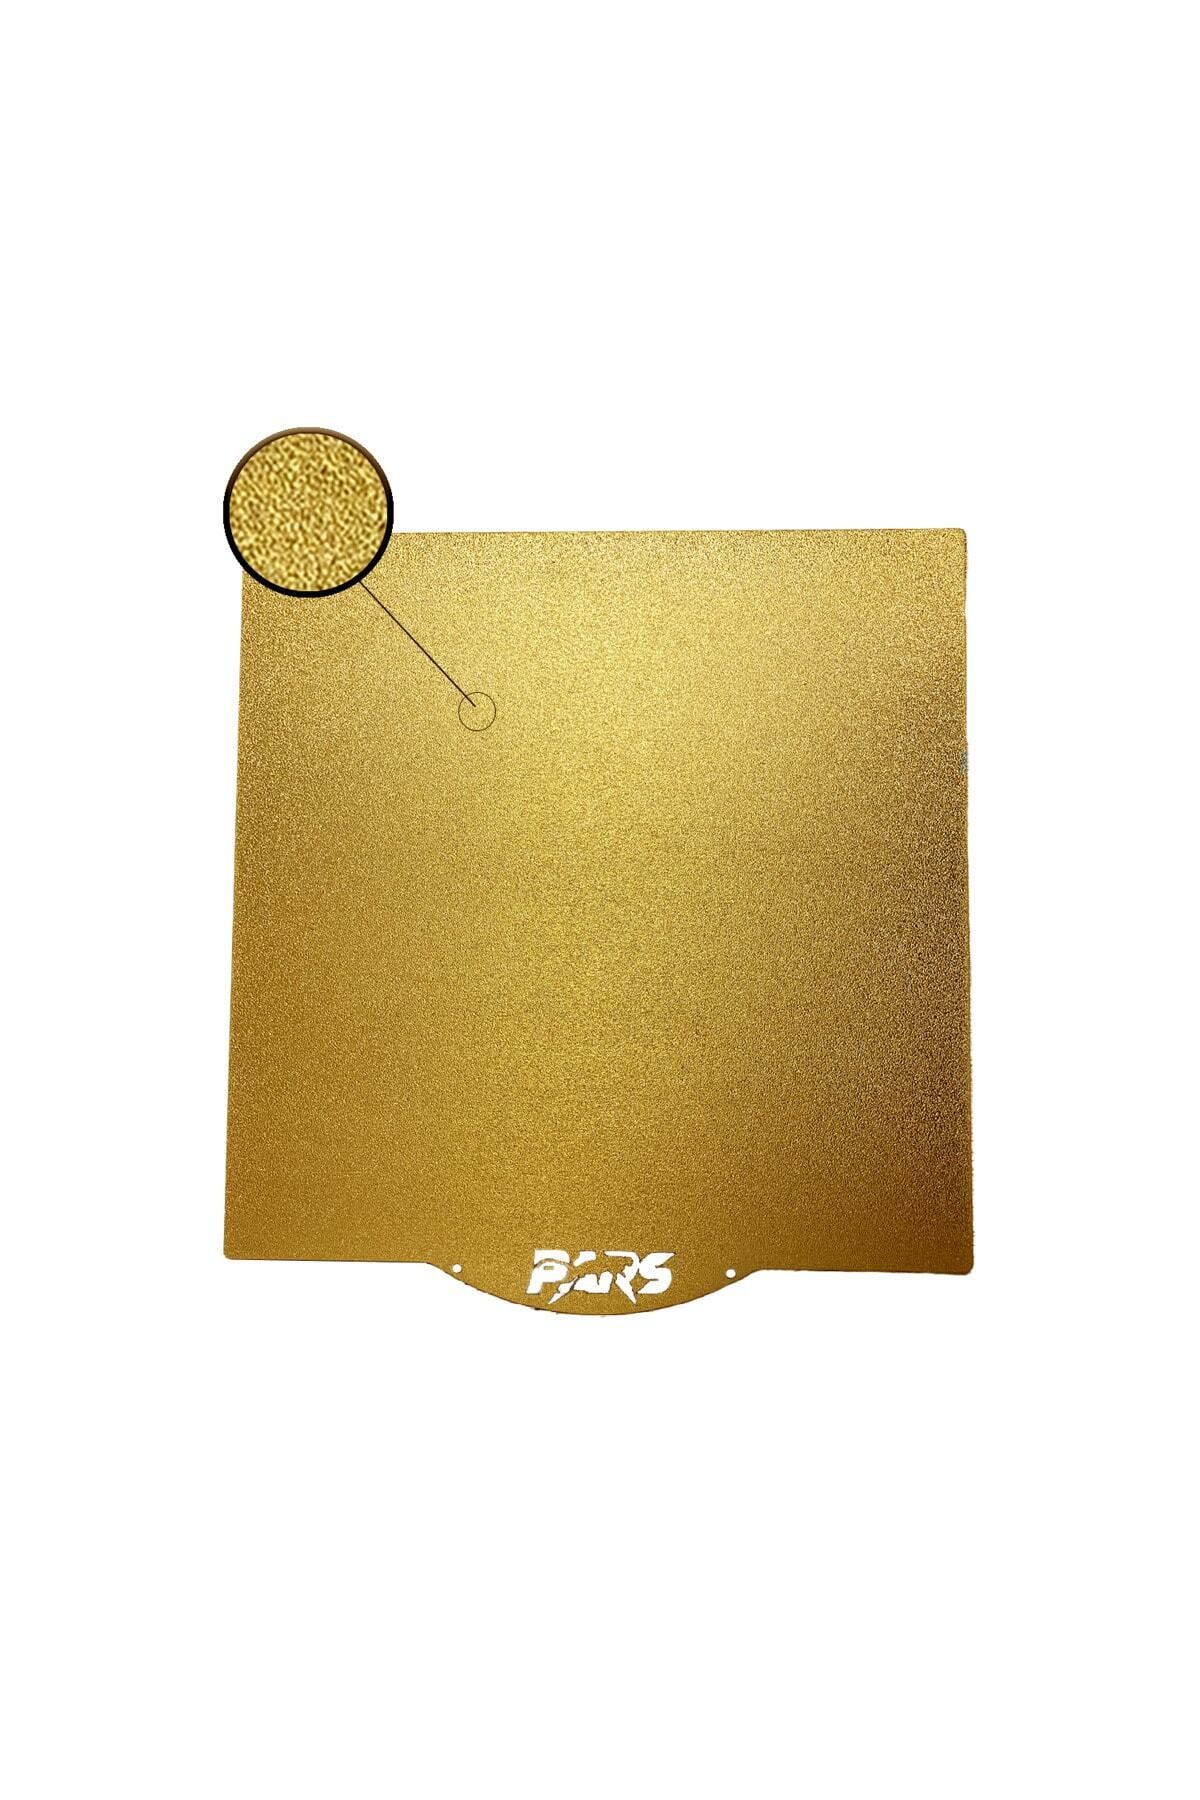 Pars 470x470 Mm Gold Pei Kaplı Özel Yay Çeliği Tabla Magnetsiz